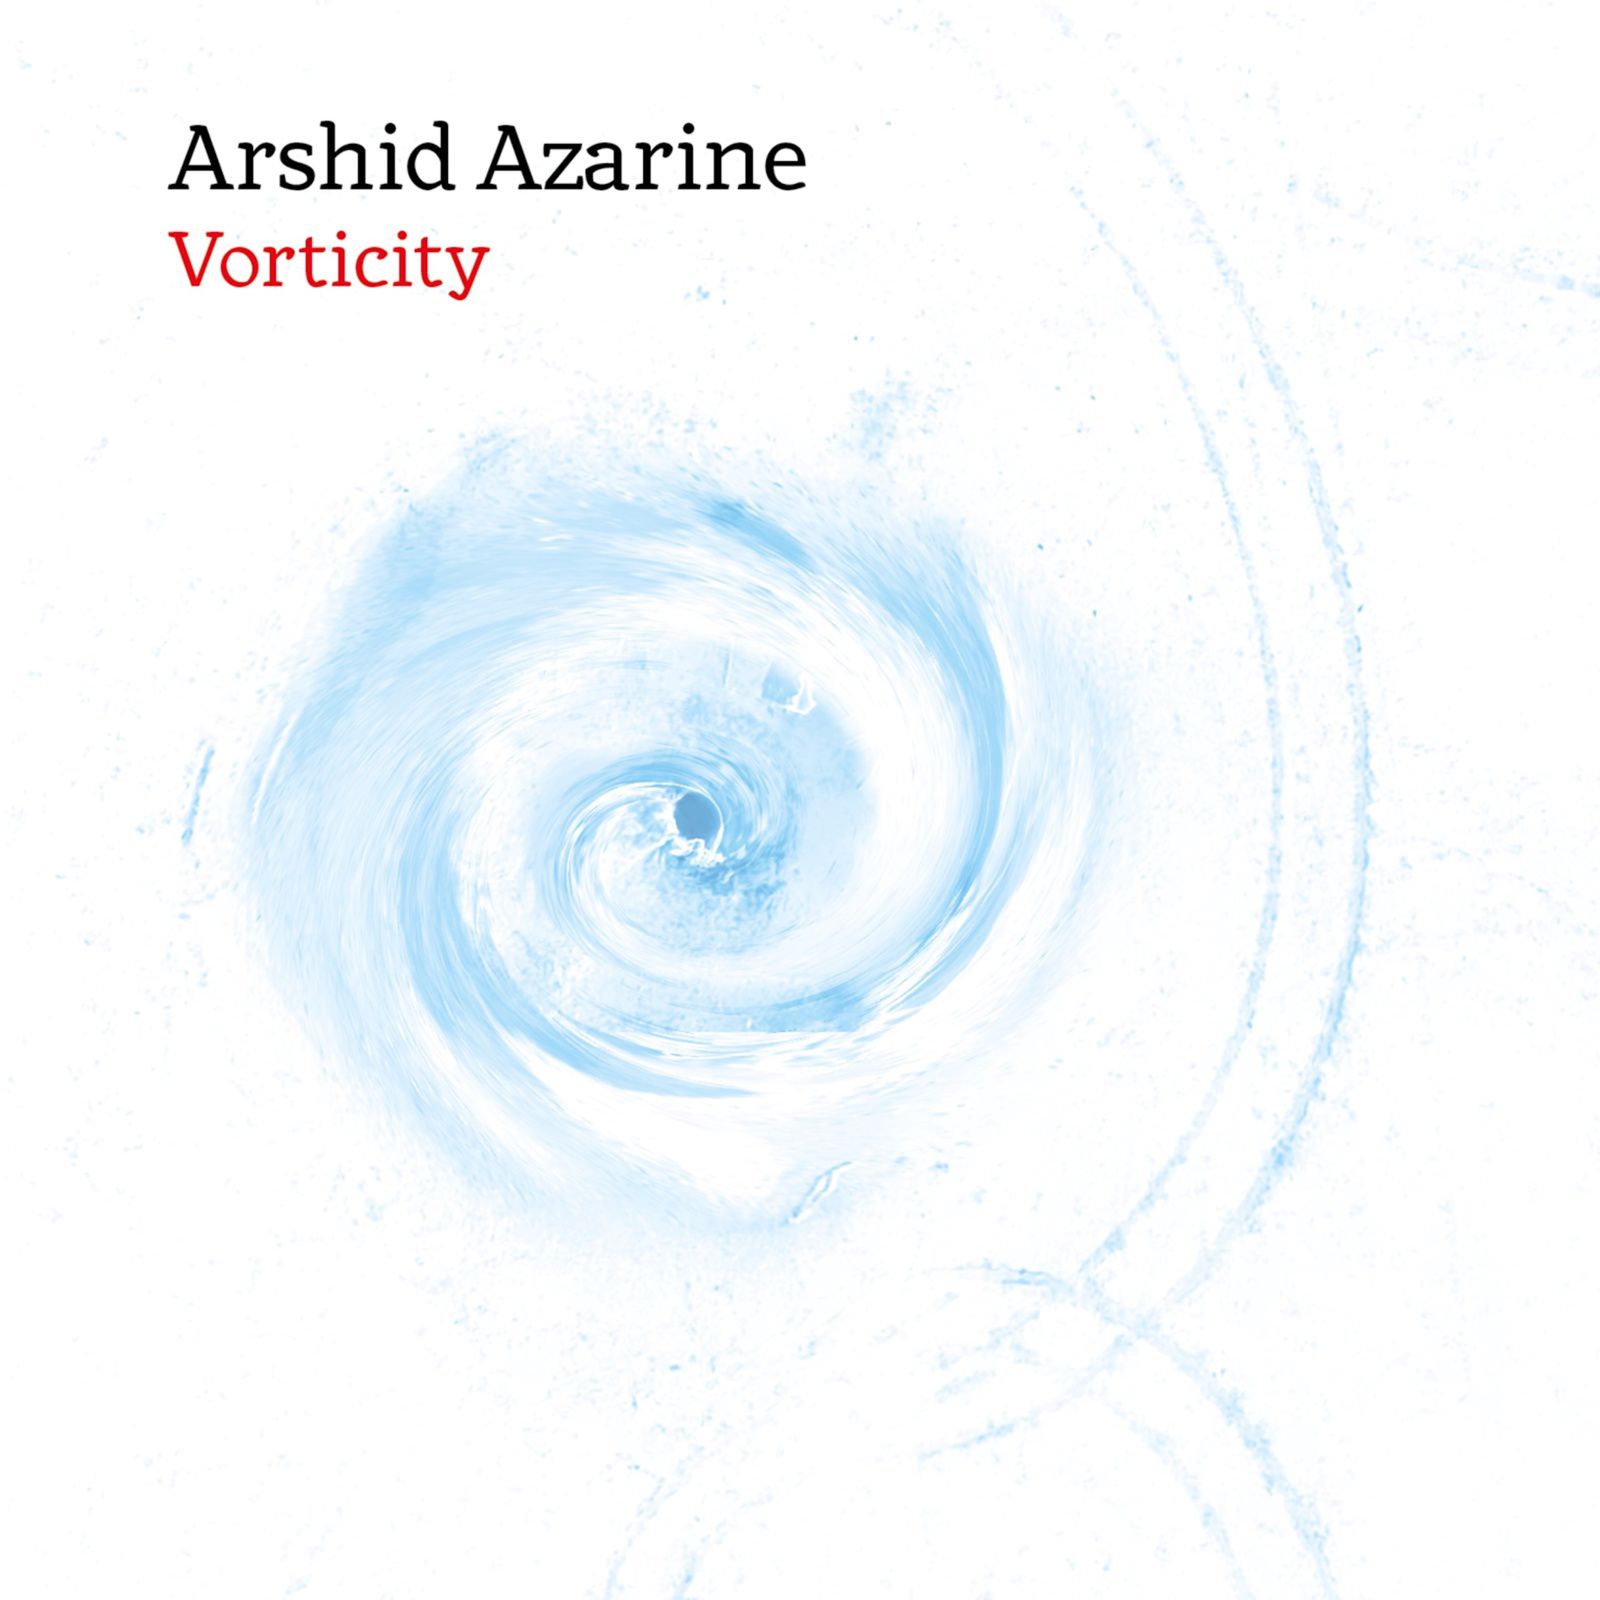 Arshid Azariane, piano médicinal l'album Vorticity